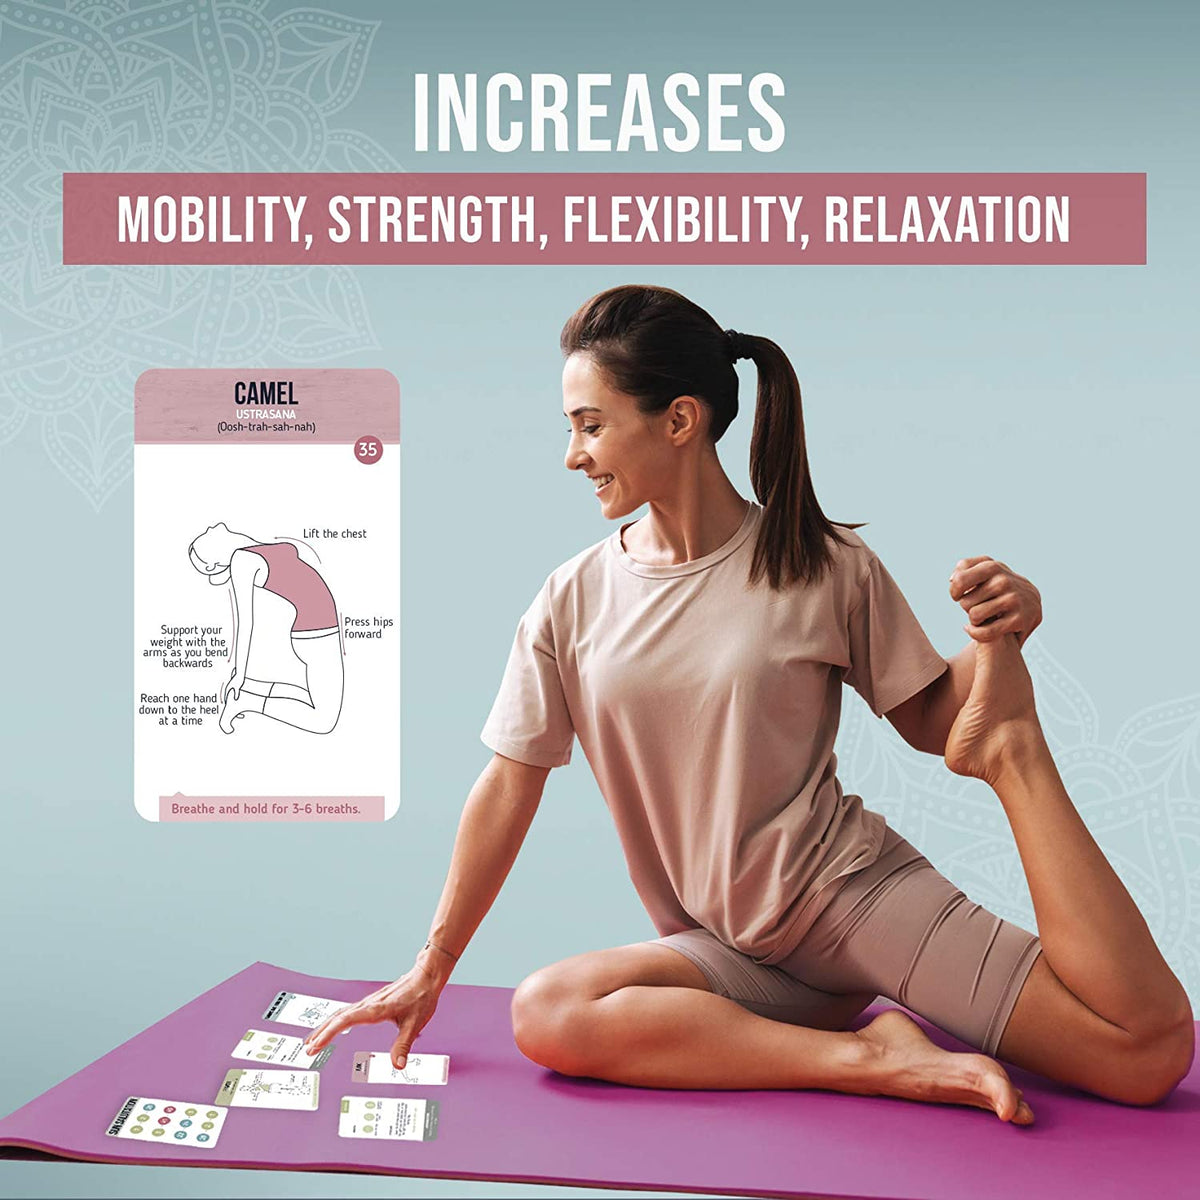 merka Yoga Flashcards 50 Cards Asana Poses